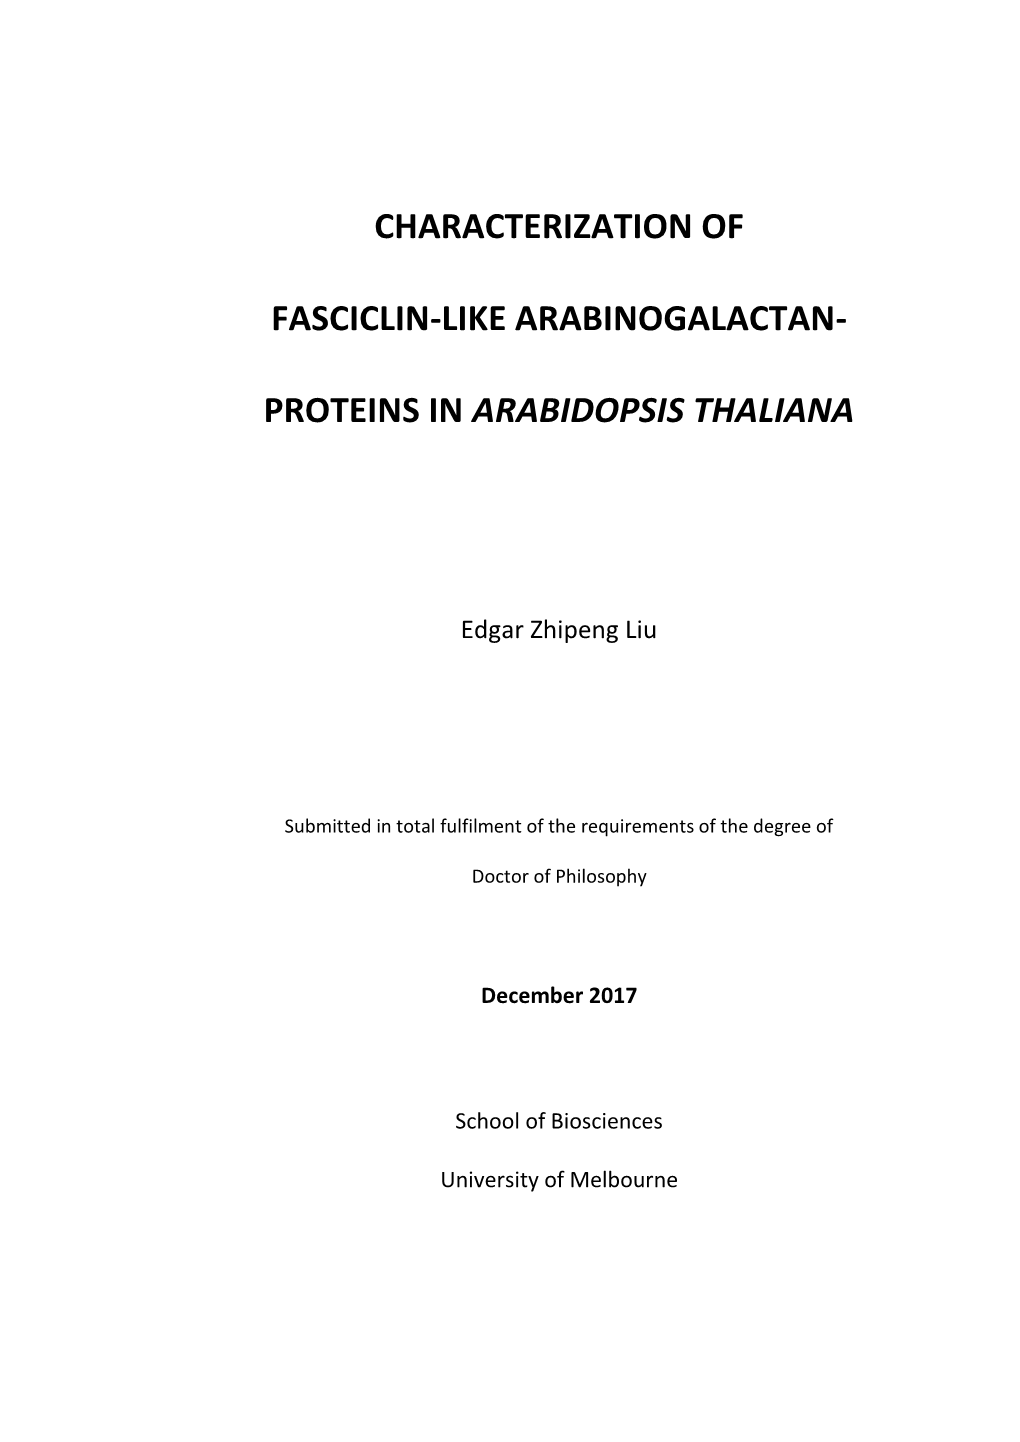 Characterization of Fasciclin-Like Arabinogalactan Proteins in Arabidopsis Thaliana